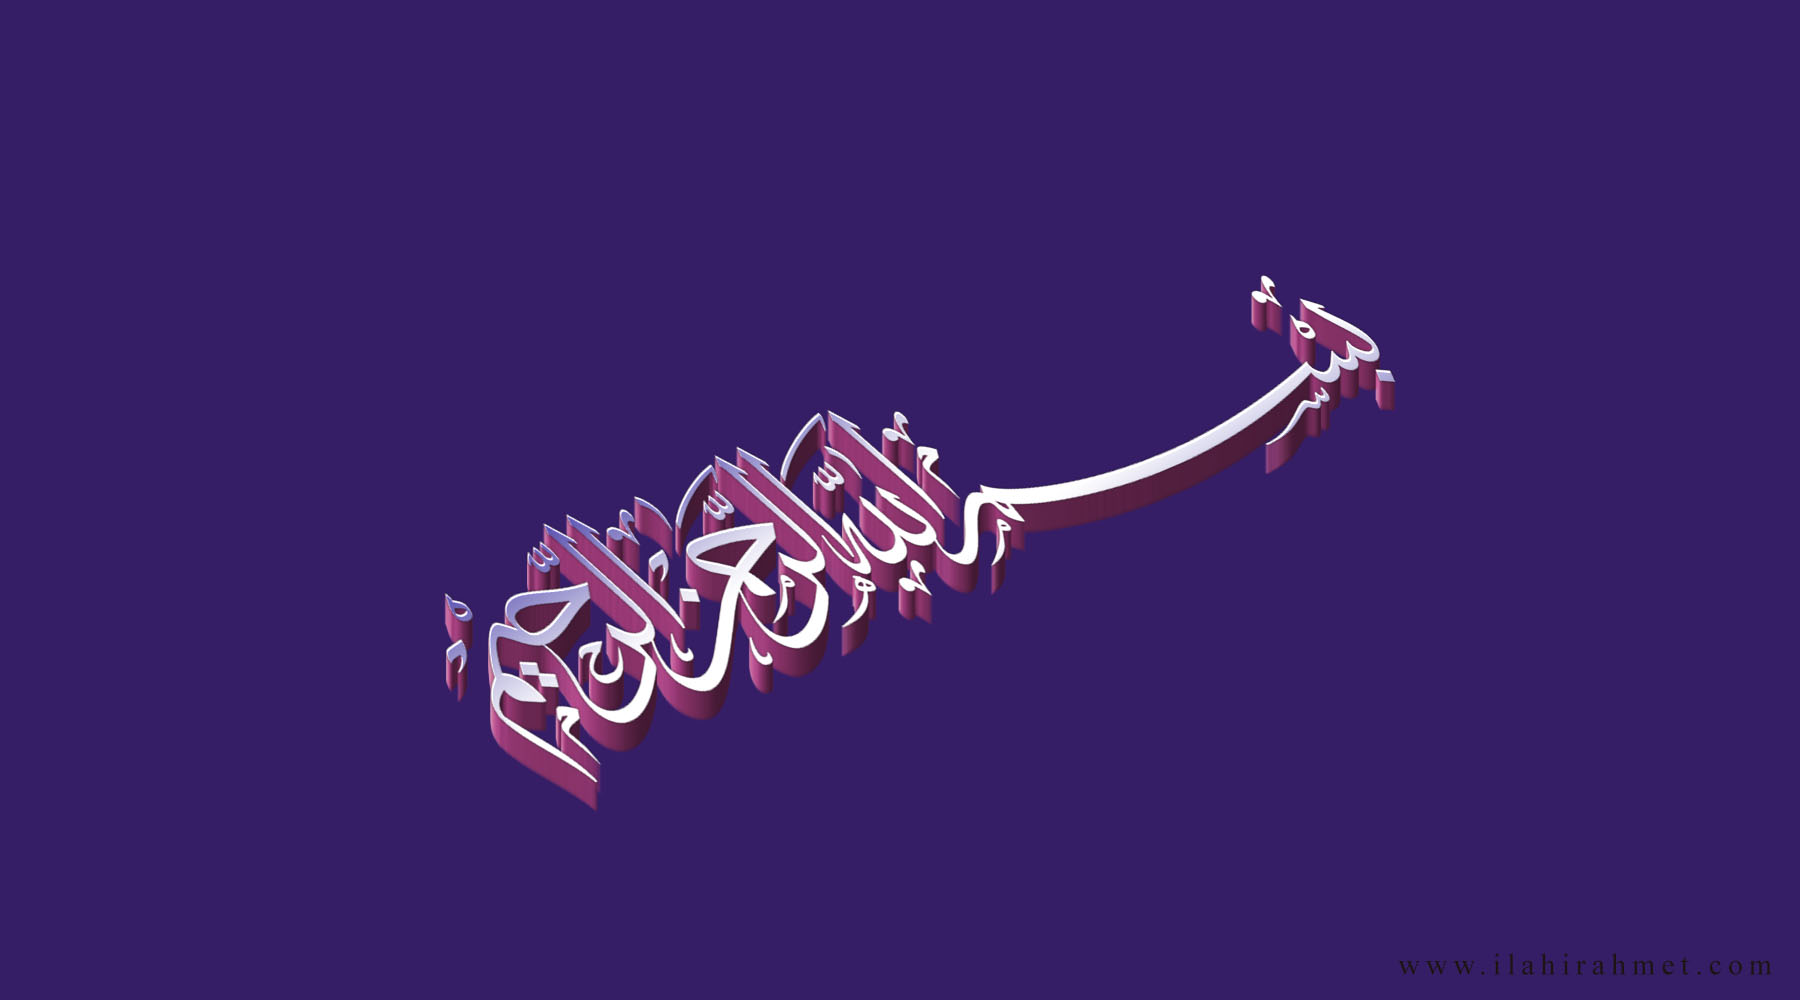 3D İslami Yazılar